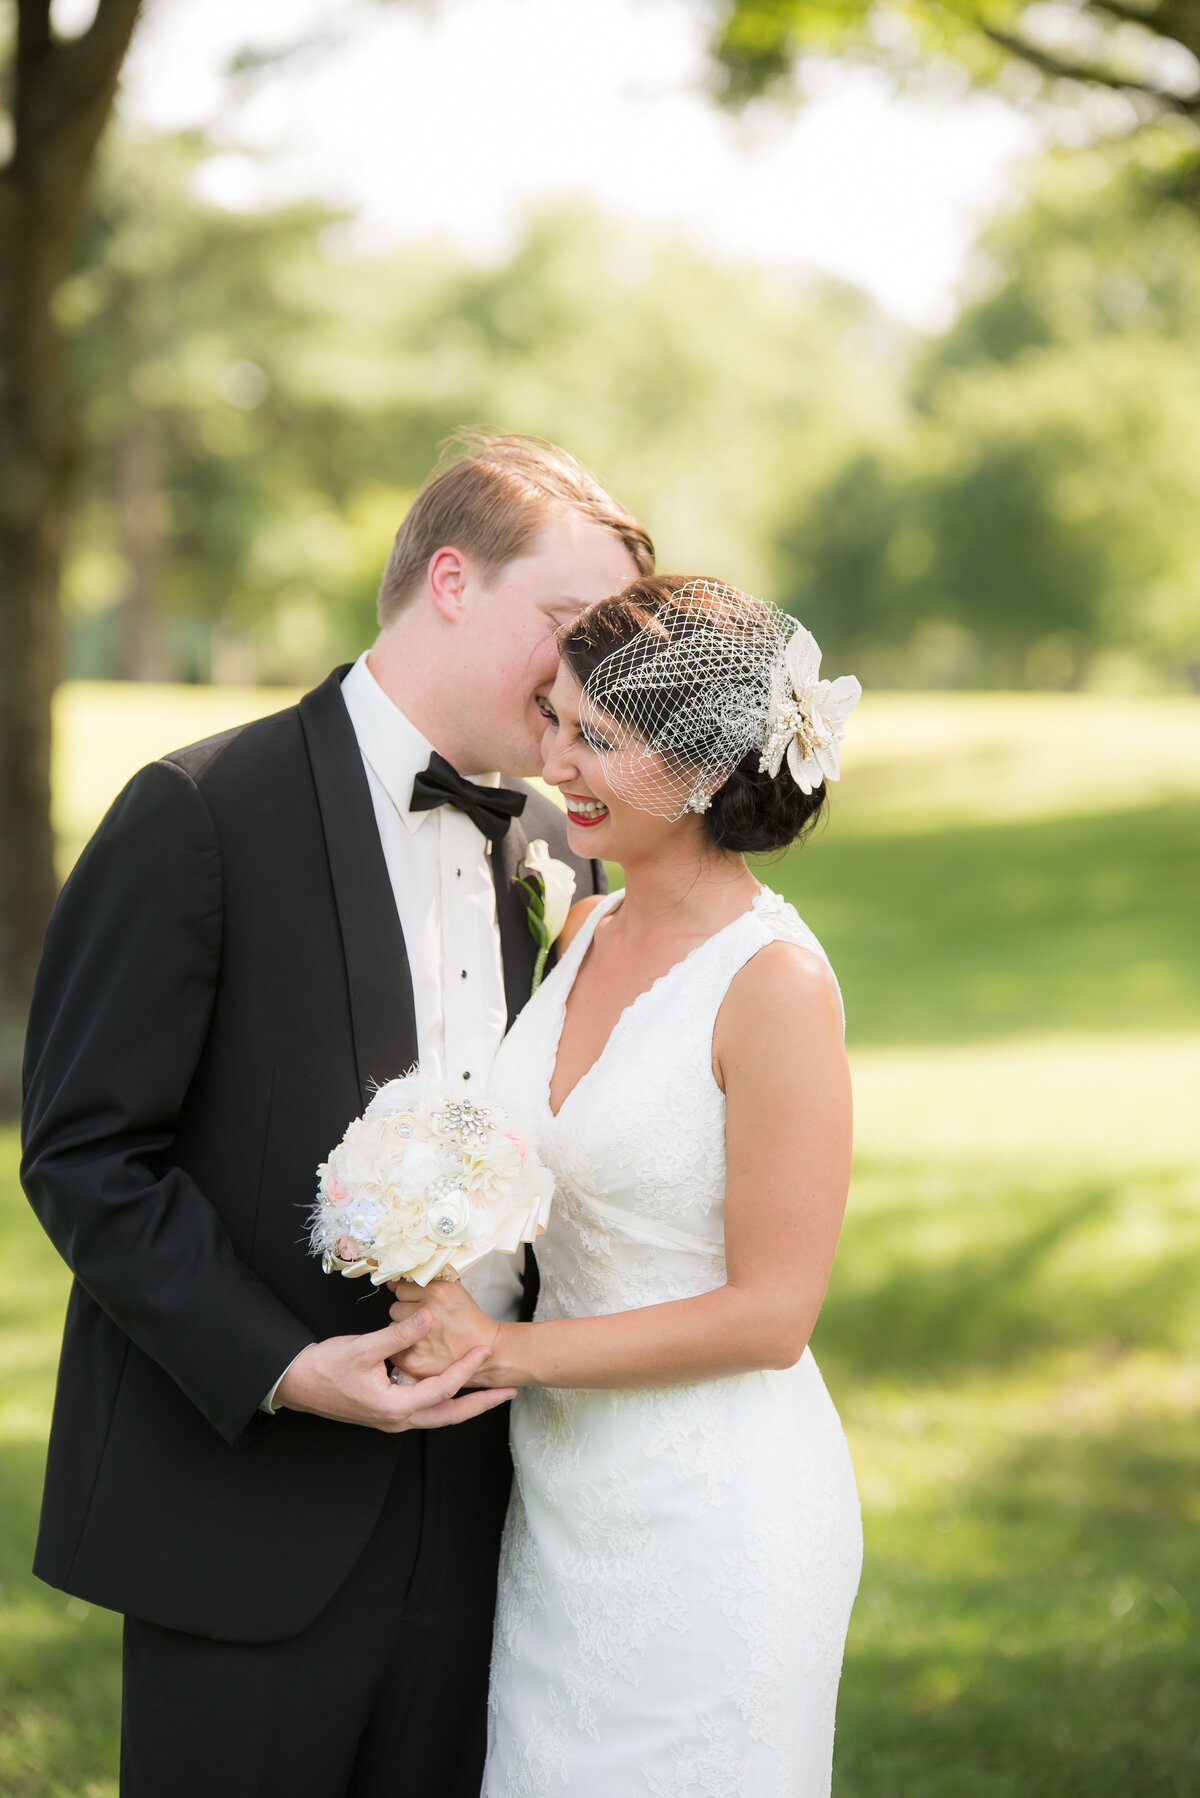 Old Hickory Country Club - Nashville Wedding Photographer - Nashville Wedding PHotographers - Southern Bride - Brides who Dance - Elegant Wedding019